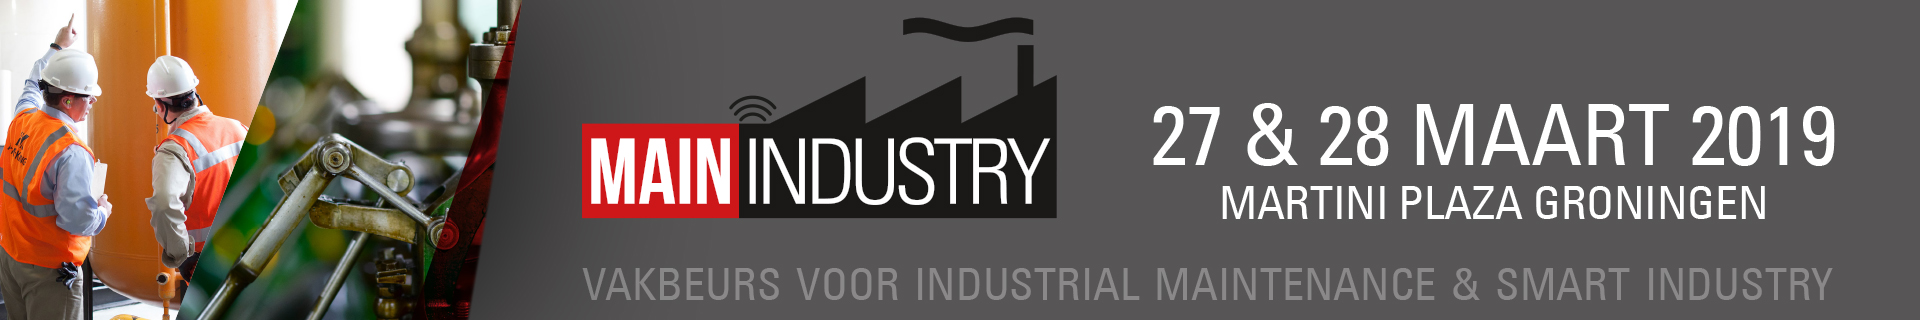 Tubi Valves Main Industry 2019